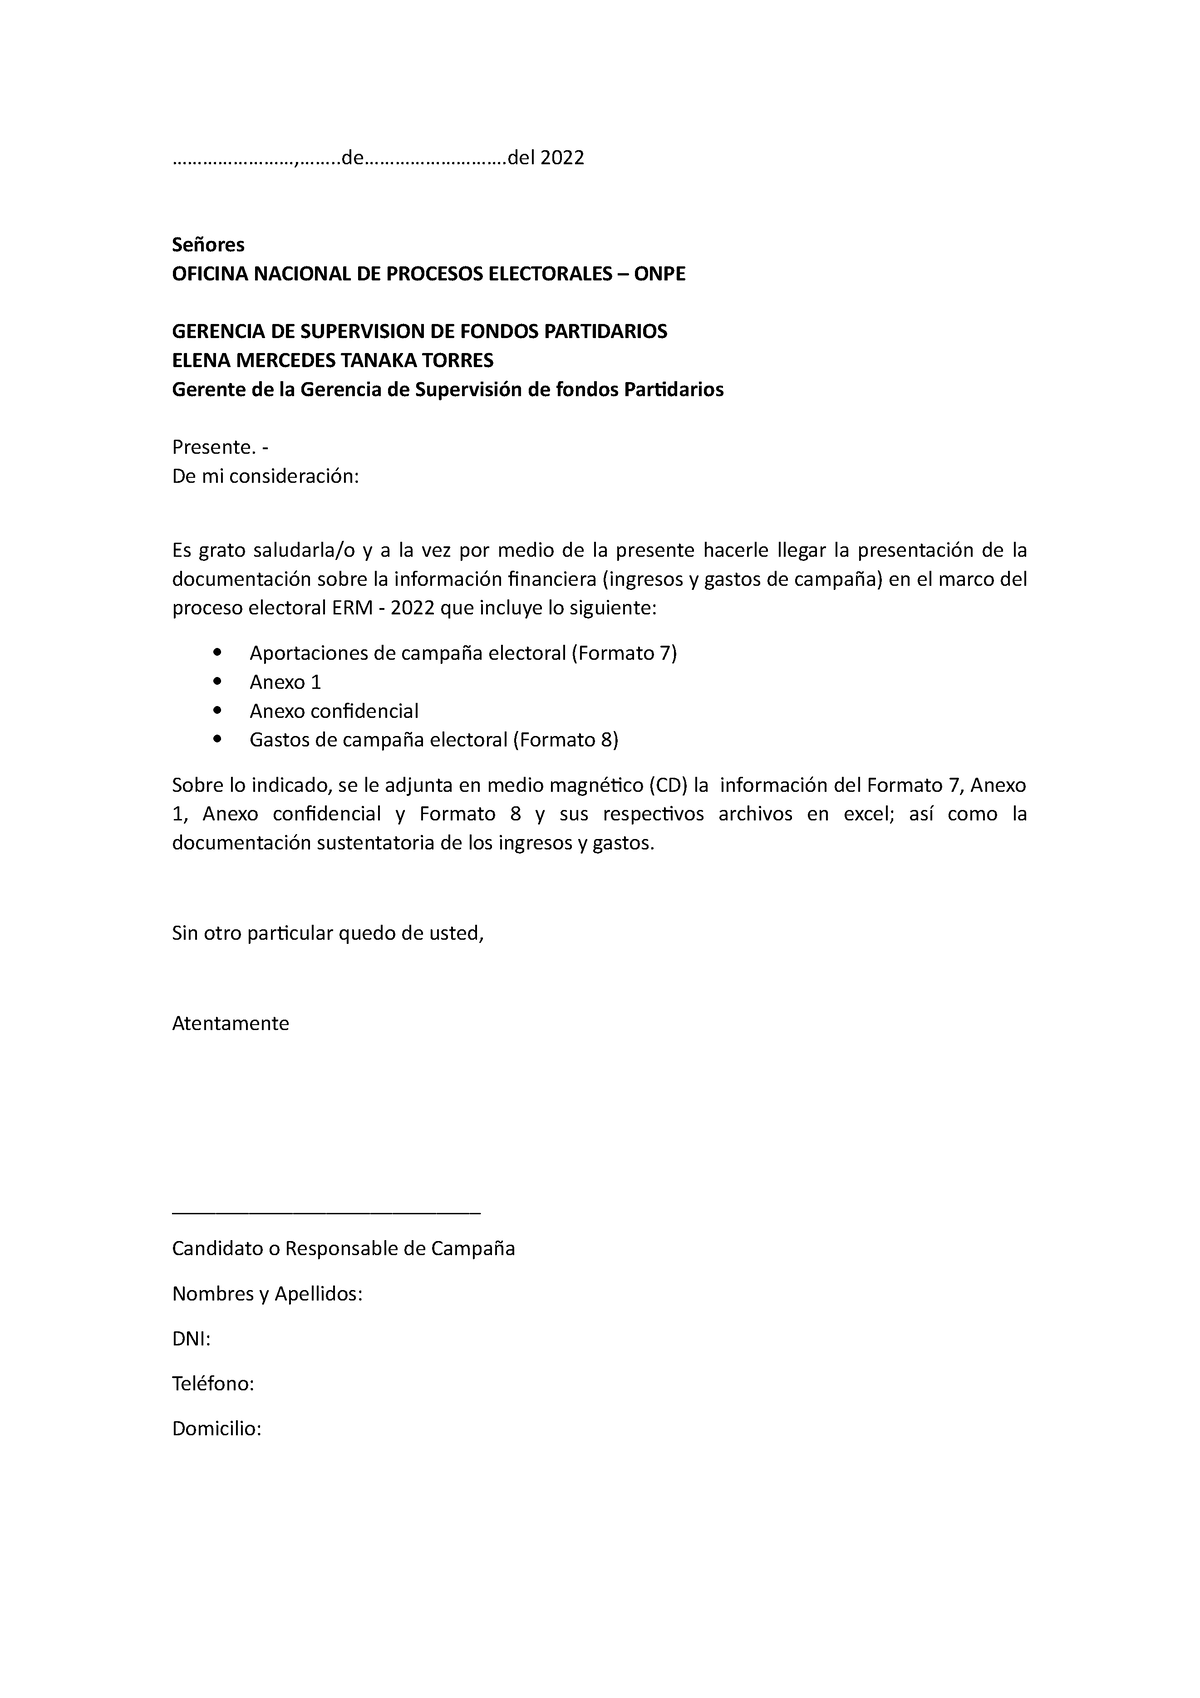 Modelo de Carta a Rendir Cuentas Candidatos ERM 2022 - - Studocu